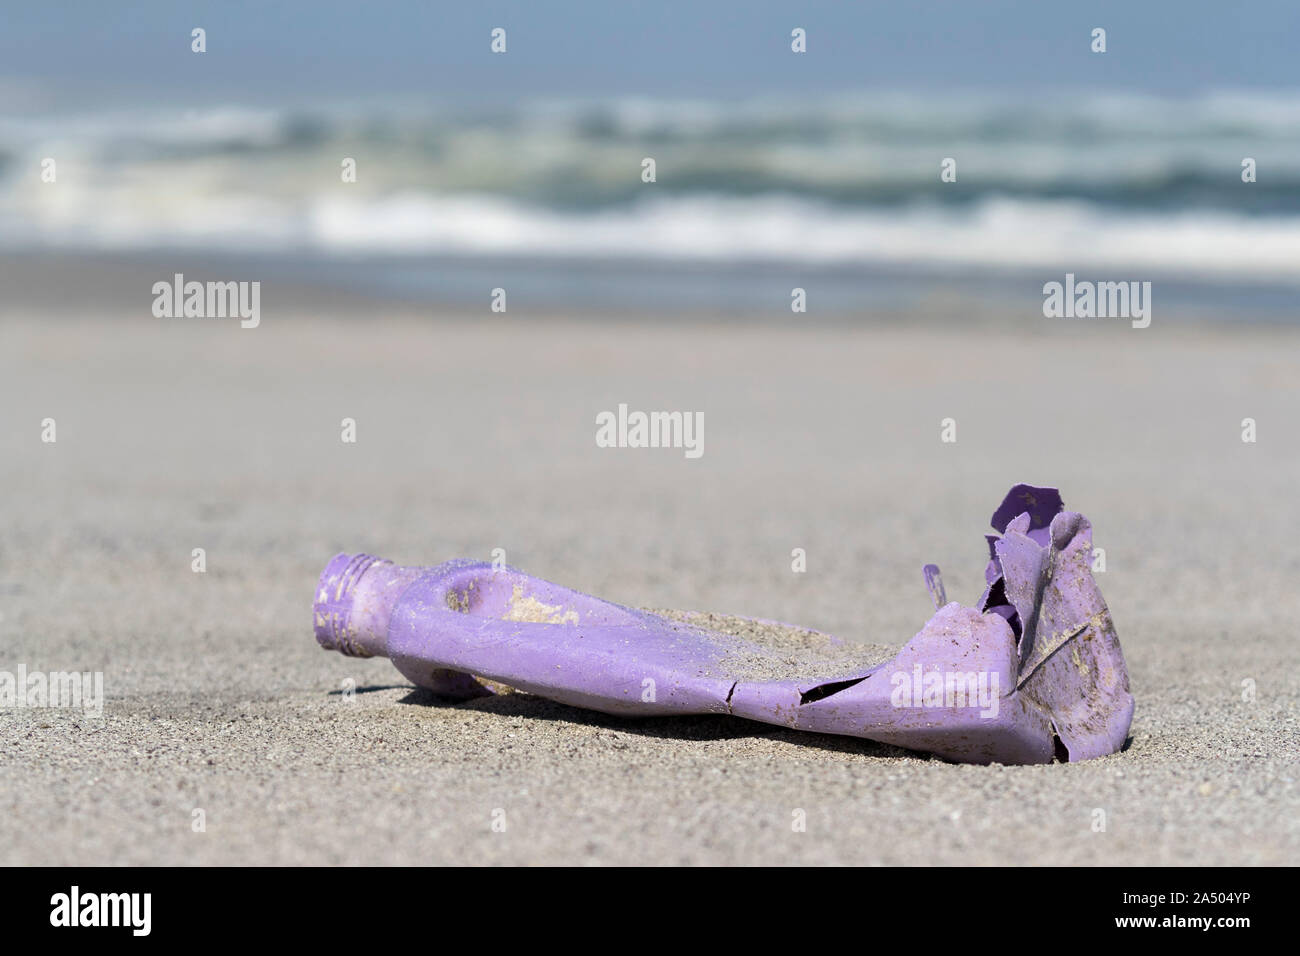 Plastic waste on West coast beach, West Coast national park, Western Cape, South Africa Stock Photo